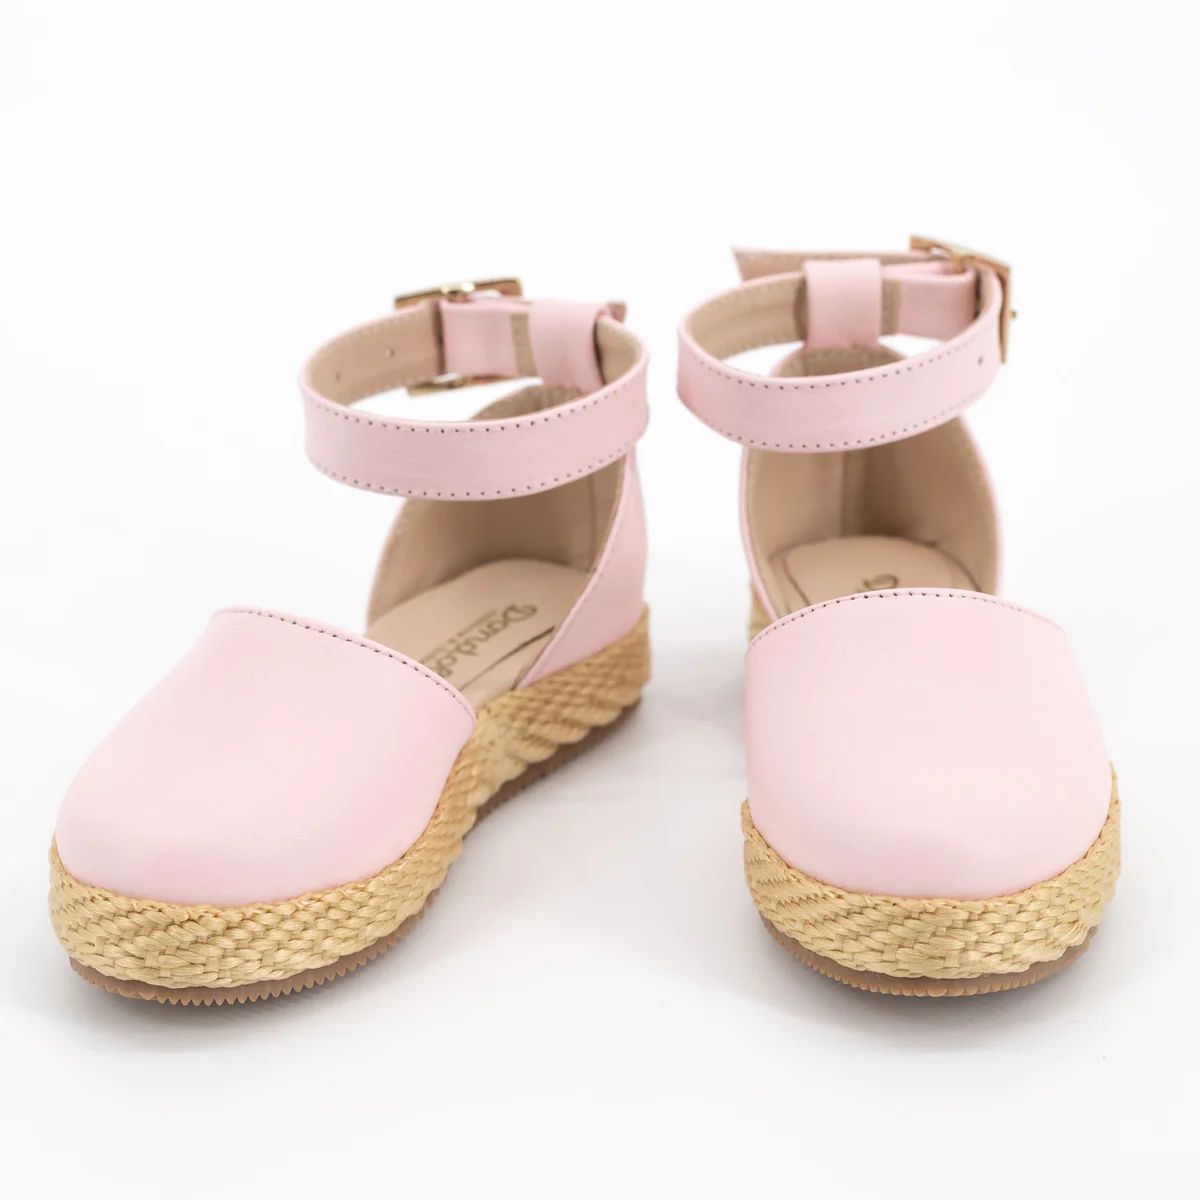 Ruthie Sandals - Pink | Dondolo